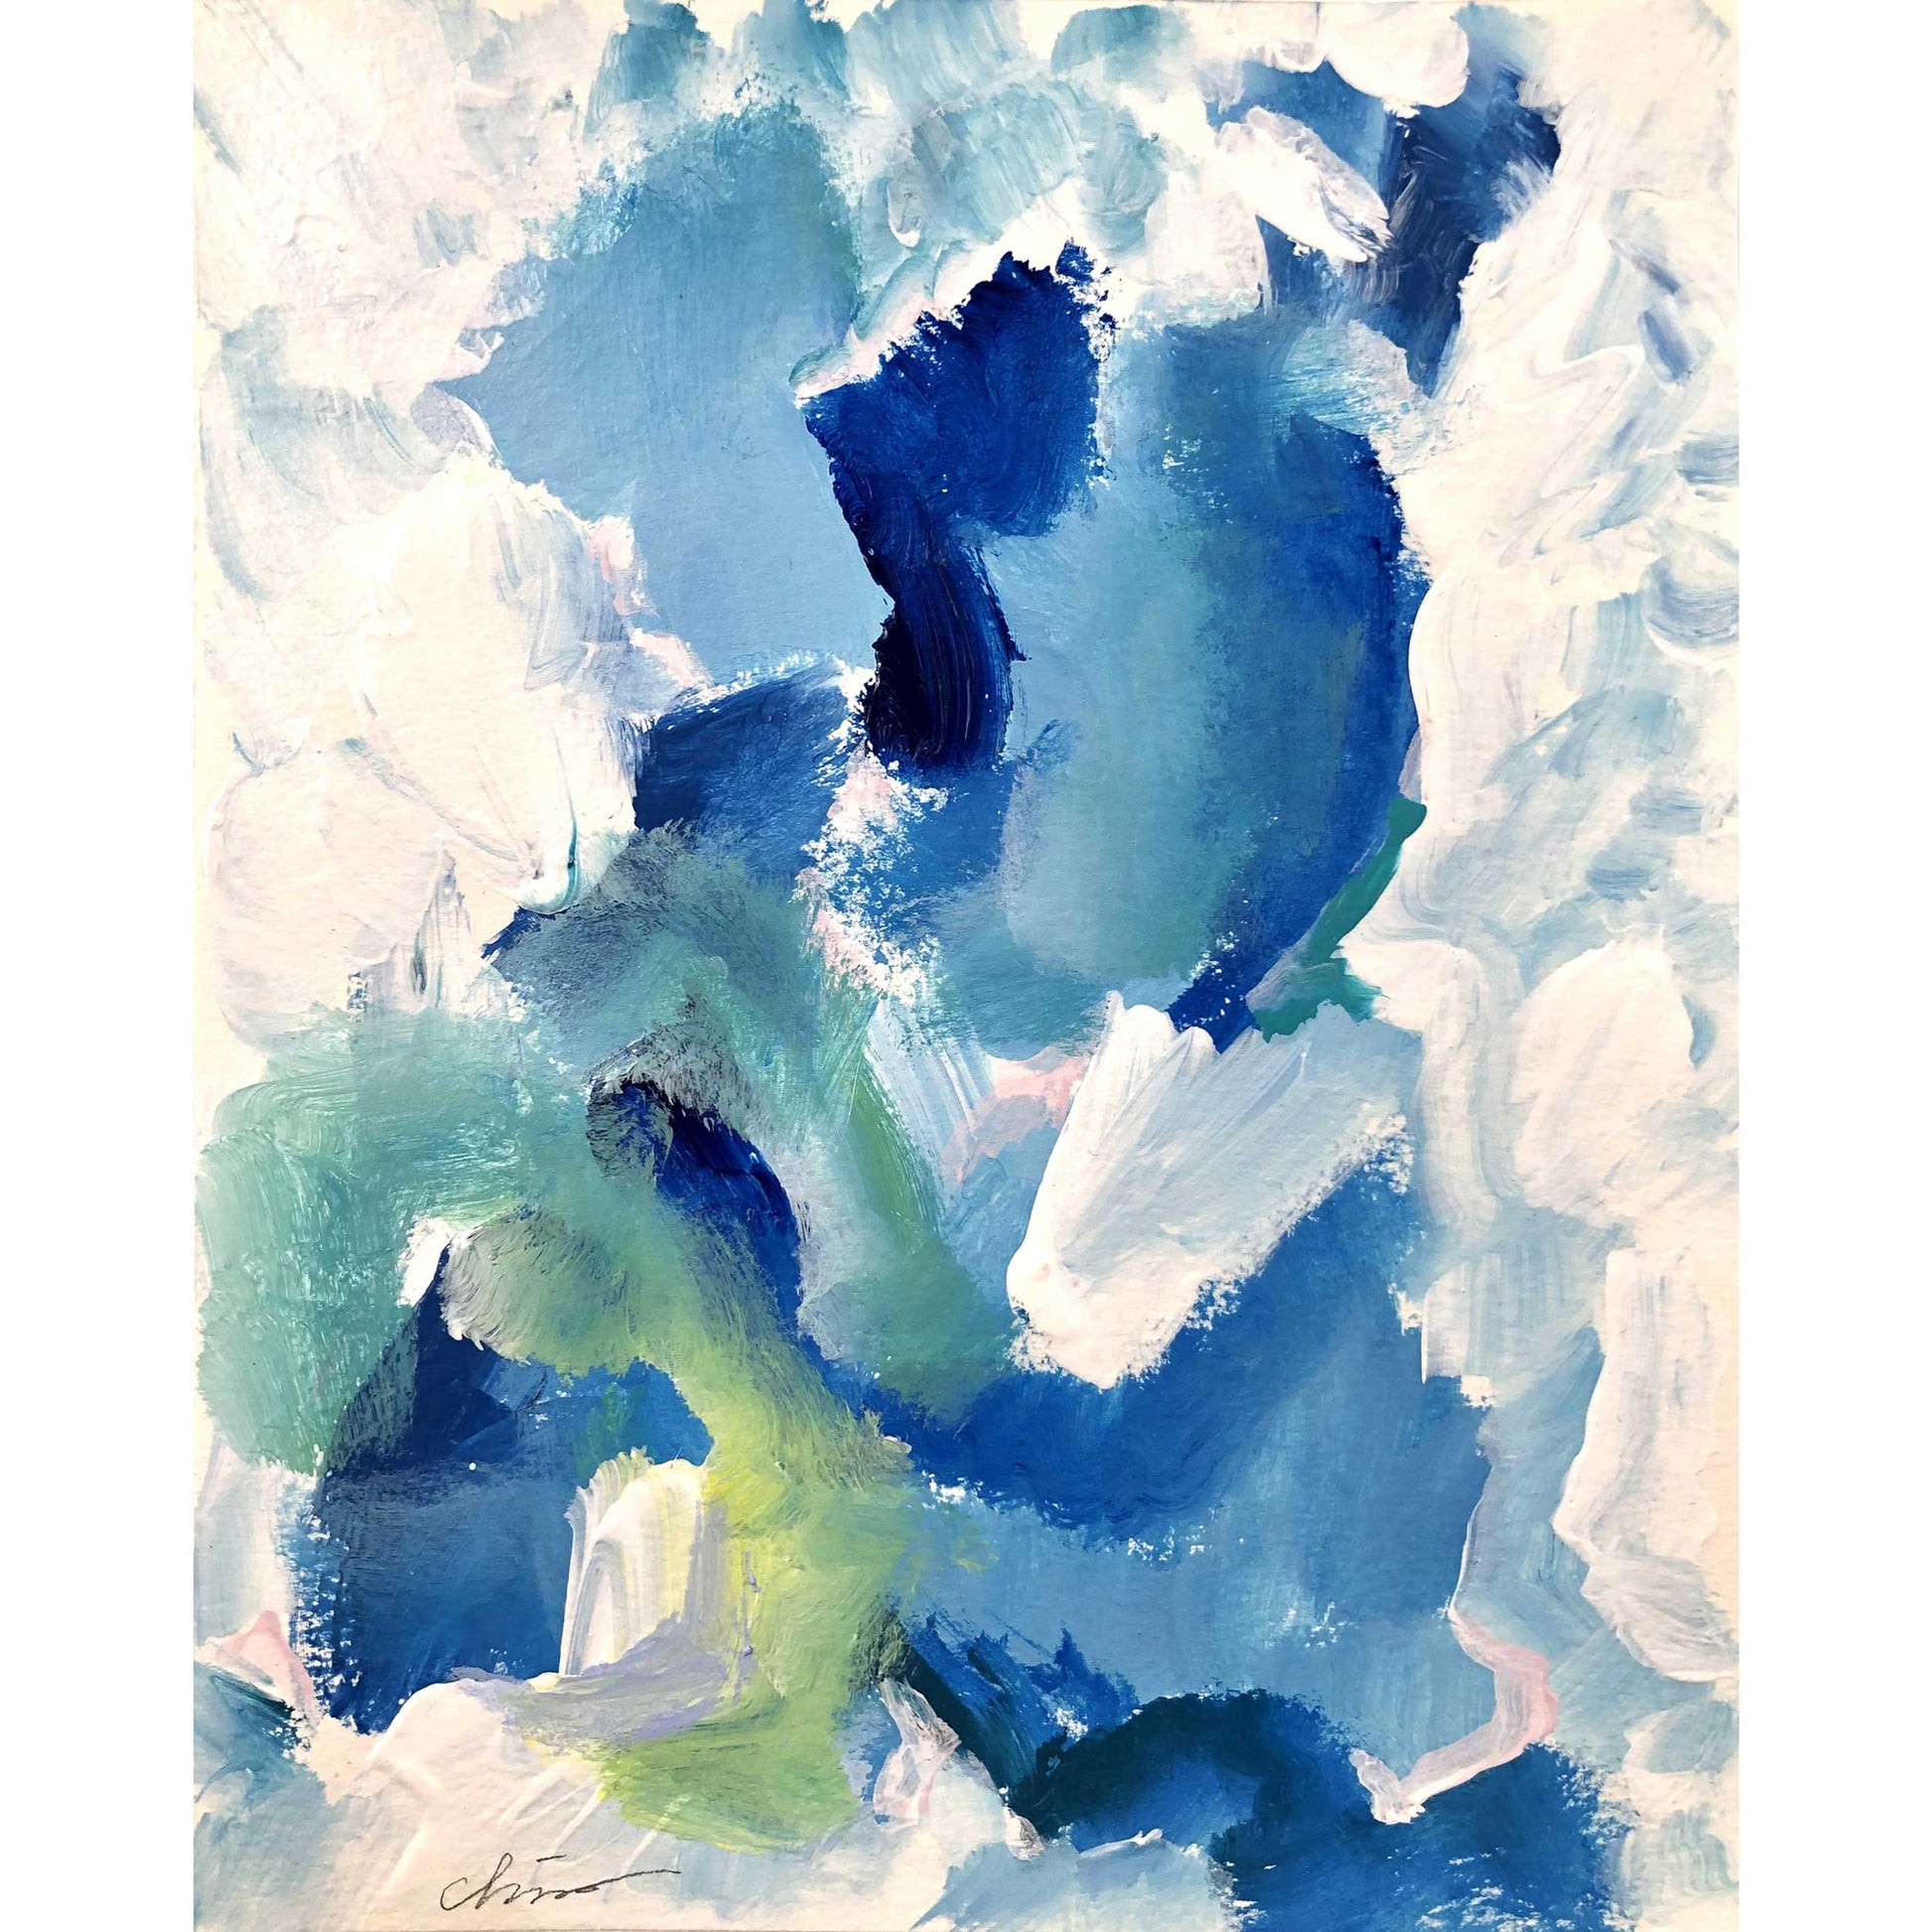 ACP-BD-001 "Blue Dance" #1 (10x8) Original acrylic abstract painting by Chizu Omori Art